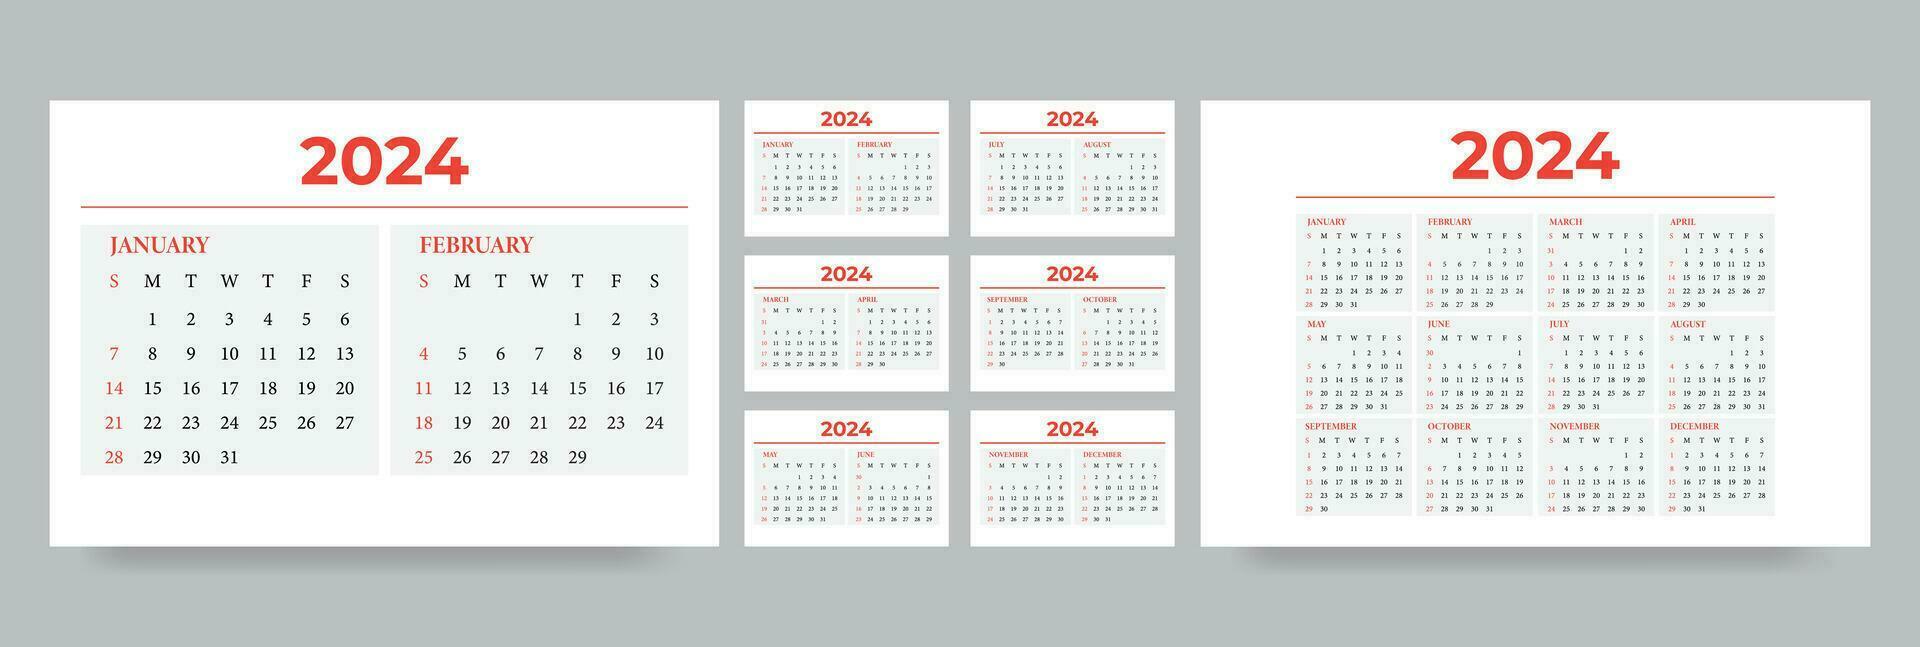 escritorio calendario 2024, calendario diseño para 2024 año, mensual calendario plantilla, calendario 2024 semana comienzo domingo, planificador para 2024 año. vector